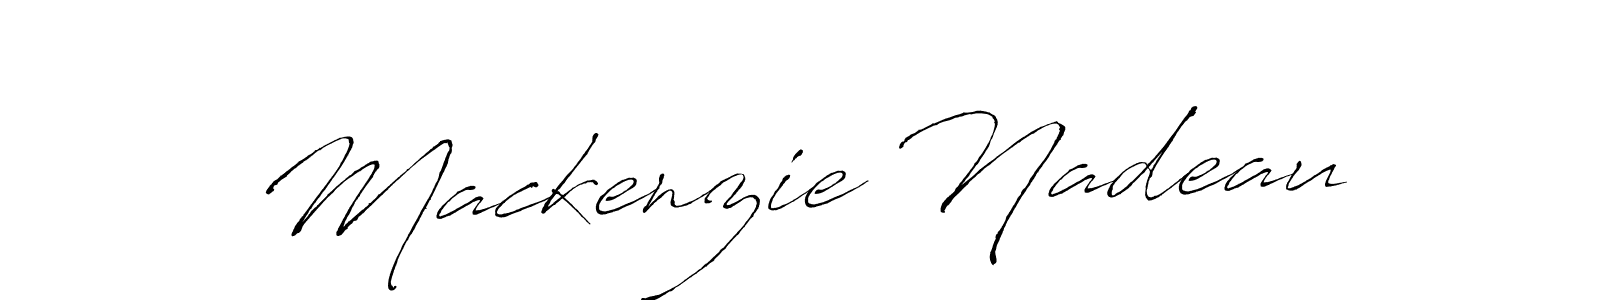 73+ Mackenzie Nadeau Name Signature Style Ideas | Great Online Autograph